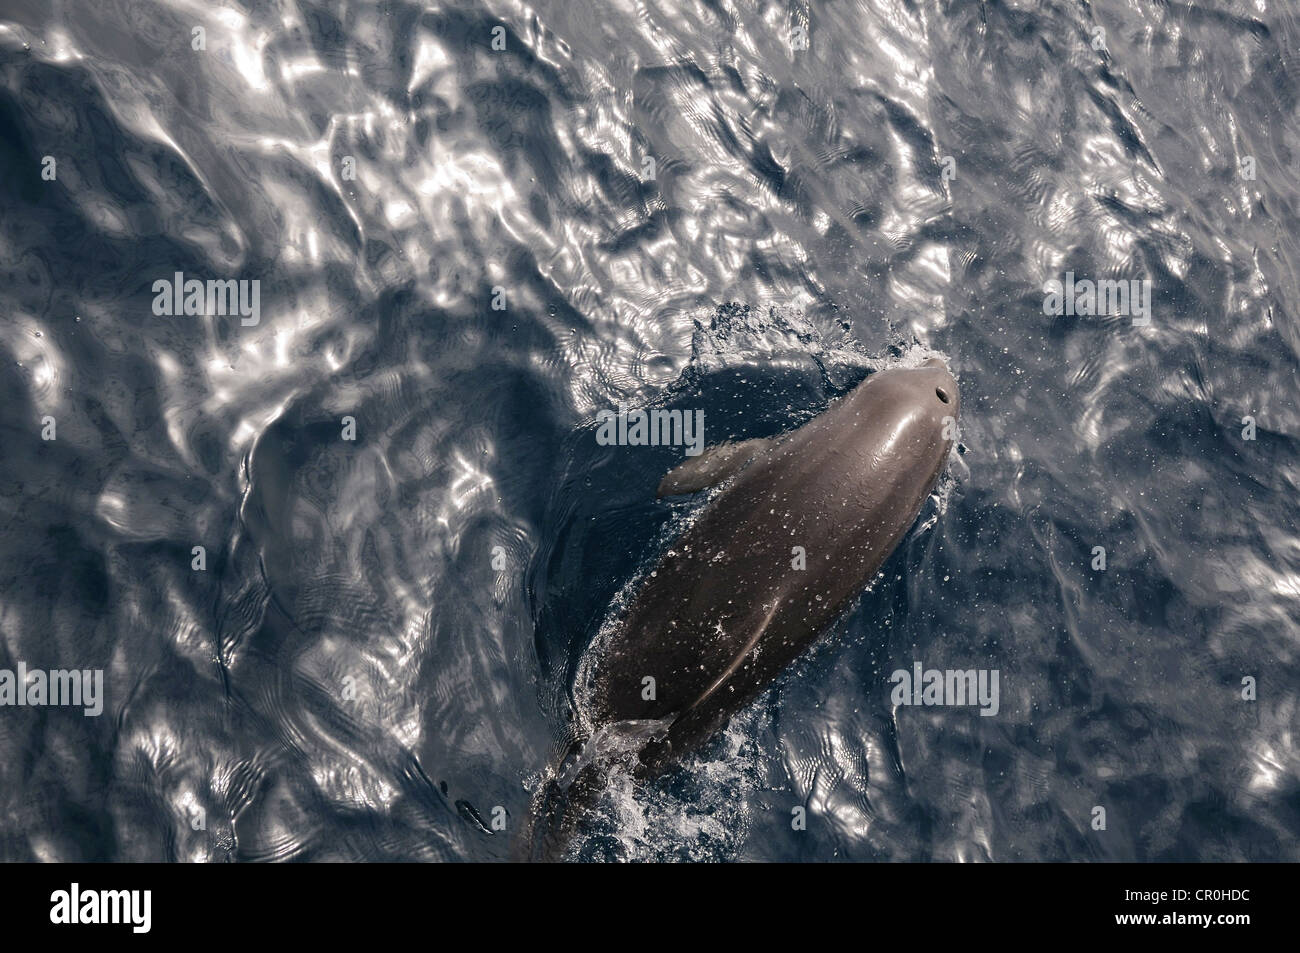 Swimming dolphin with splashes in dark key Stock Photo